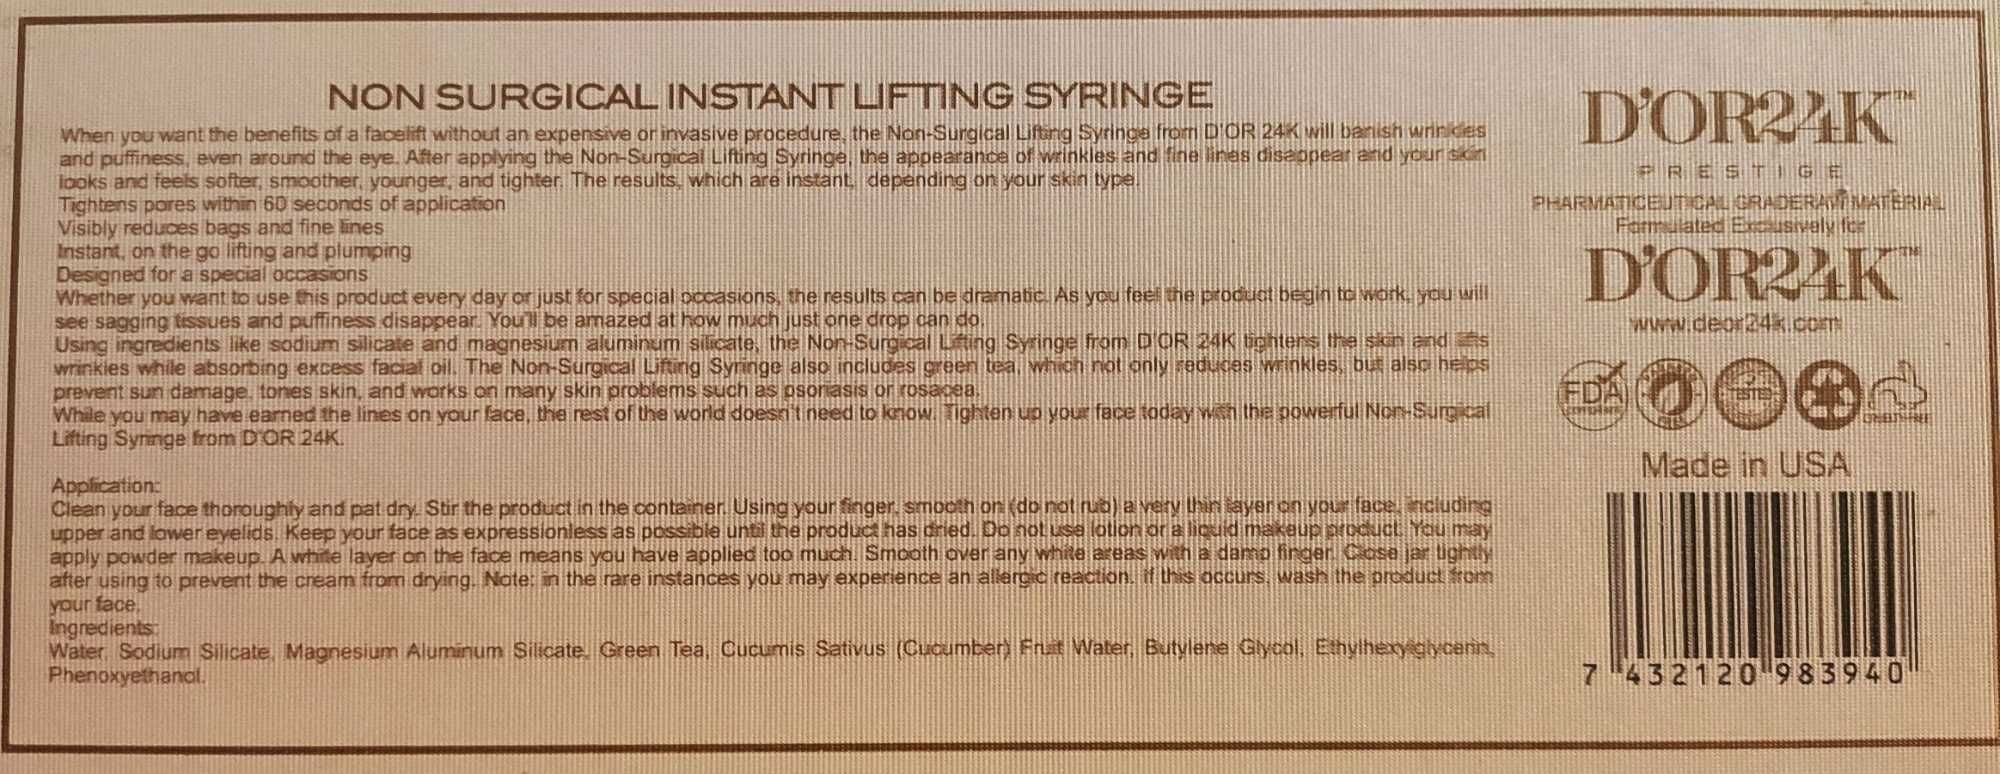 D'or24k Prestige Instant Syringe - krem liftingujący pod oczy